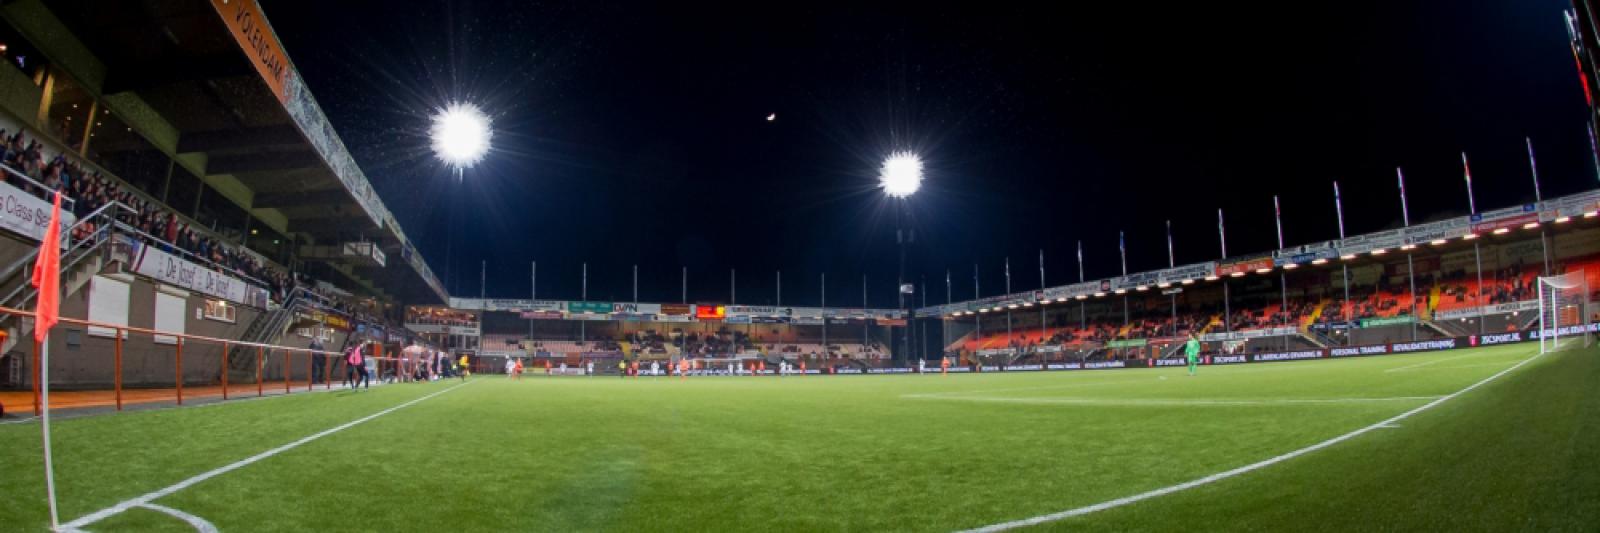 FC Volendam | Volendam | Sportsexposure